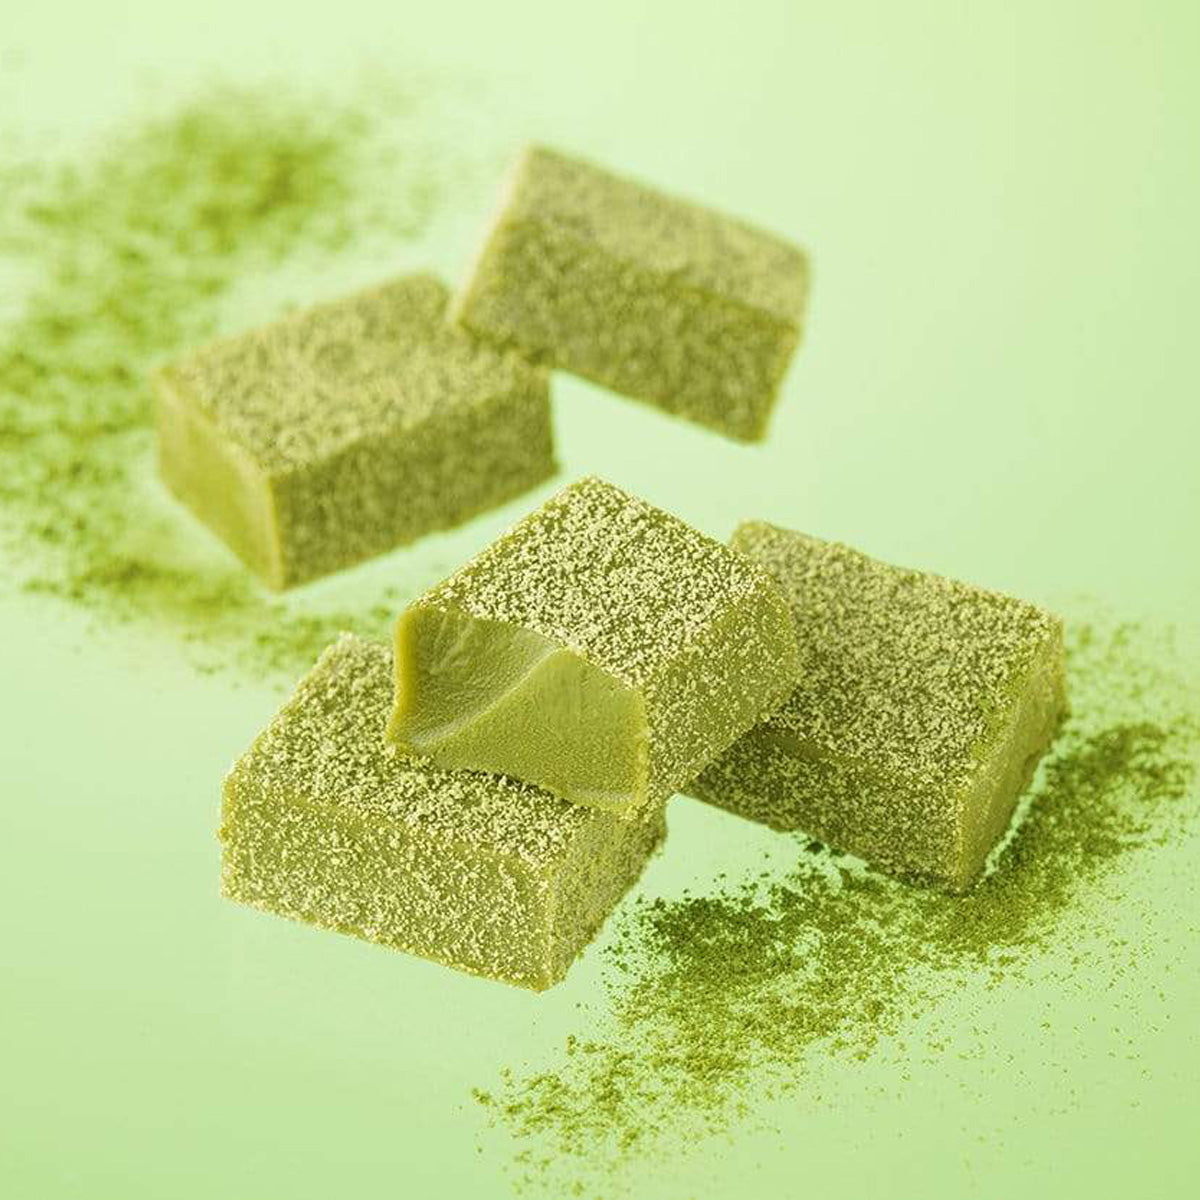 ROYCE' Chocolate - Nama Chocolate "Matcha" - Image shows green blocks of chocolates with green tea powder dusting. Background is green.